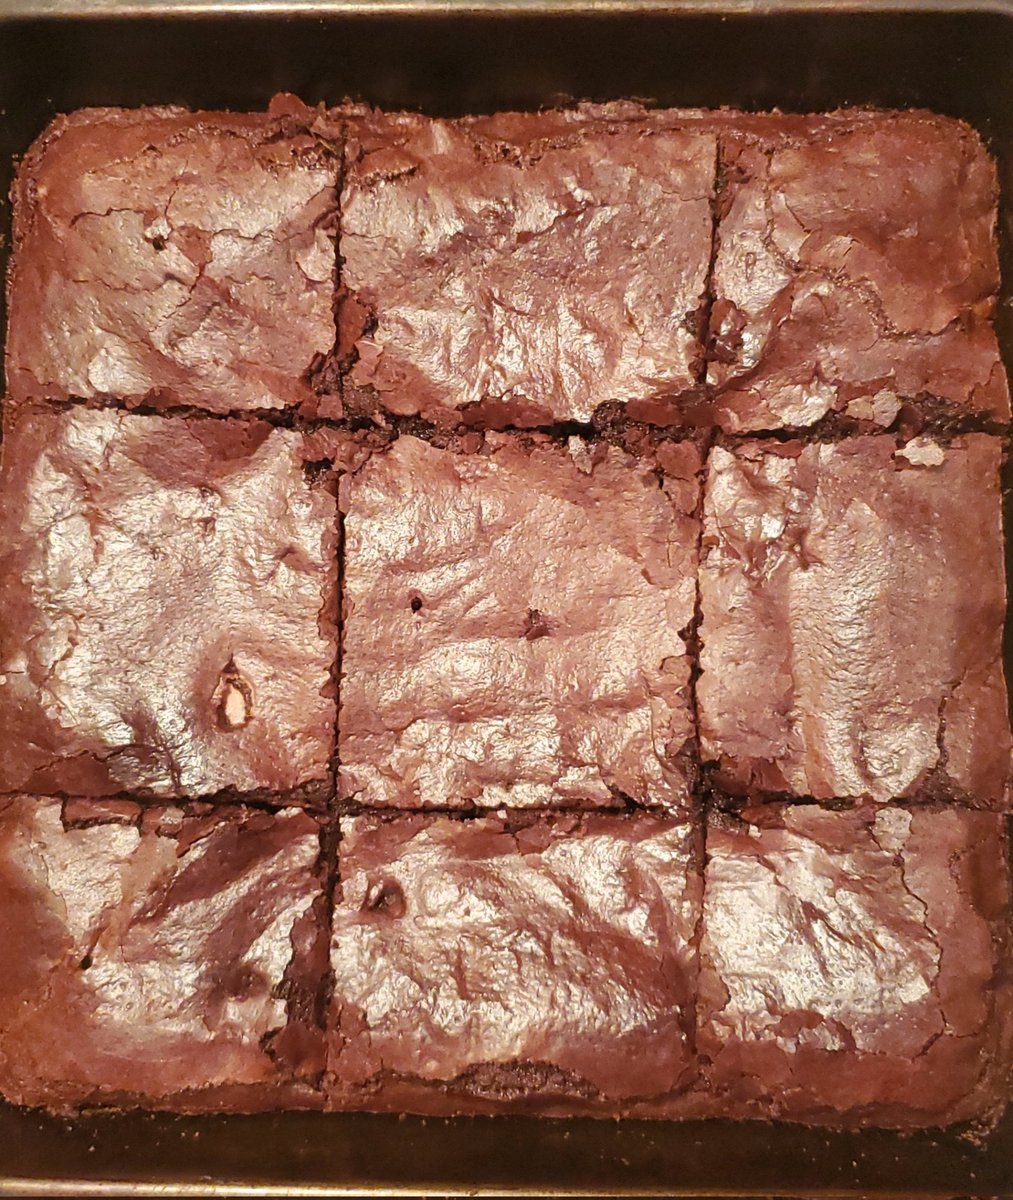 Yummmm made brownies 🤤🤤🤤 #icecreamandbrowineswithchocolatesauce #homemade #madefromscratch